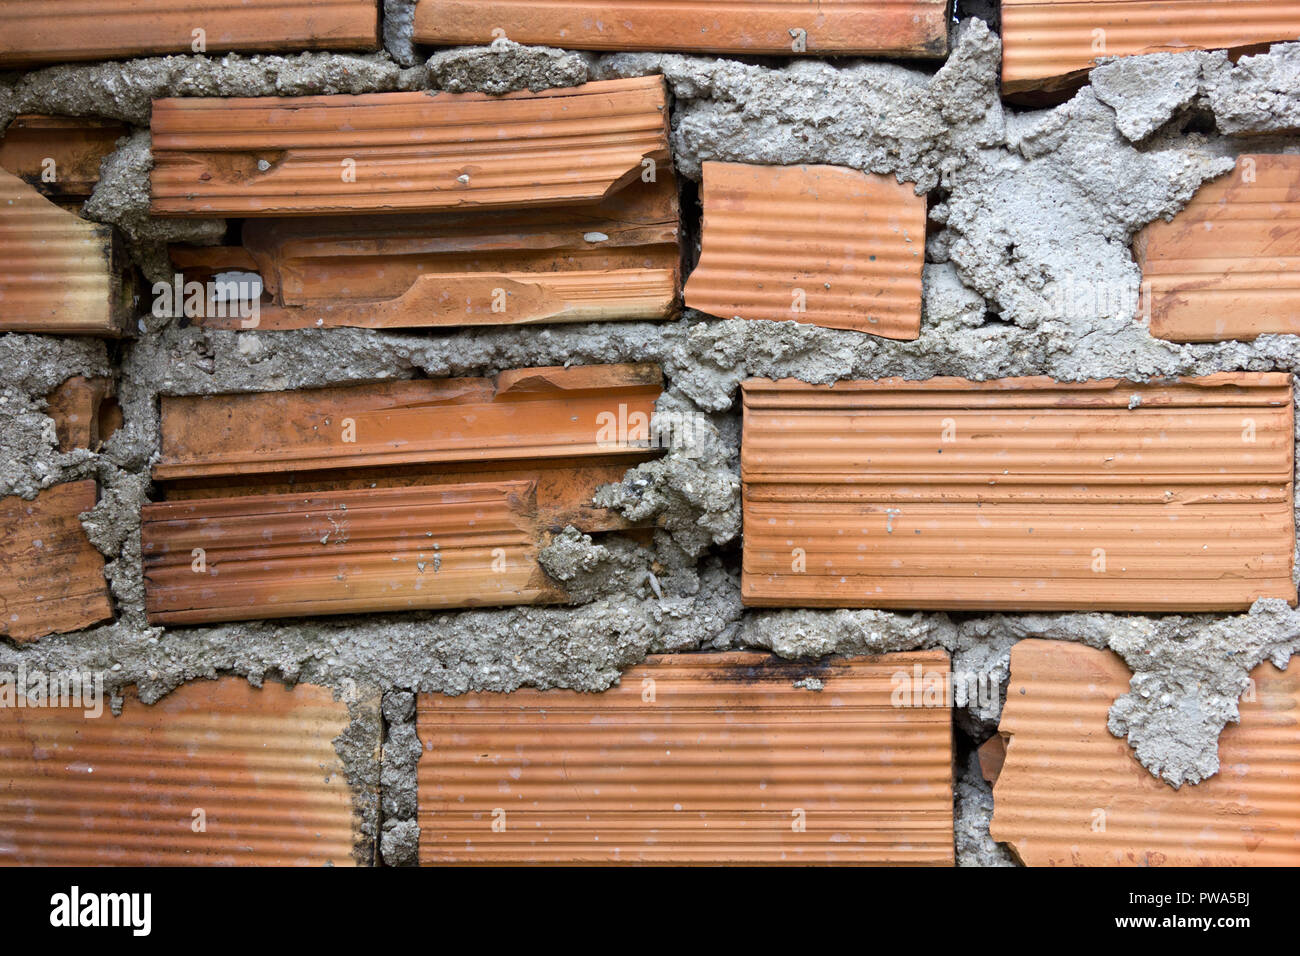 Bricks and mortar Stock Photo: 222114582 - Alamy